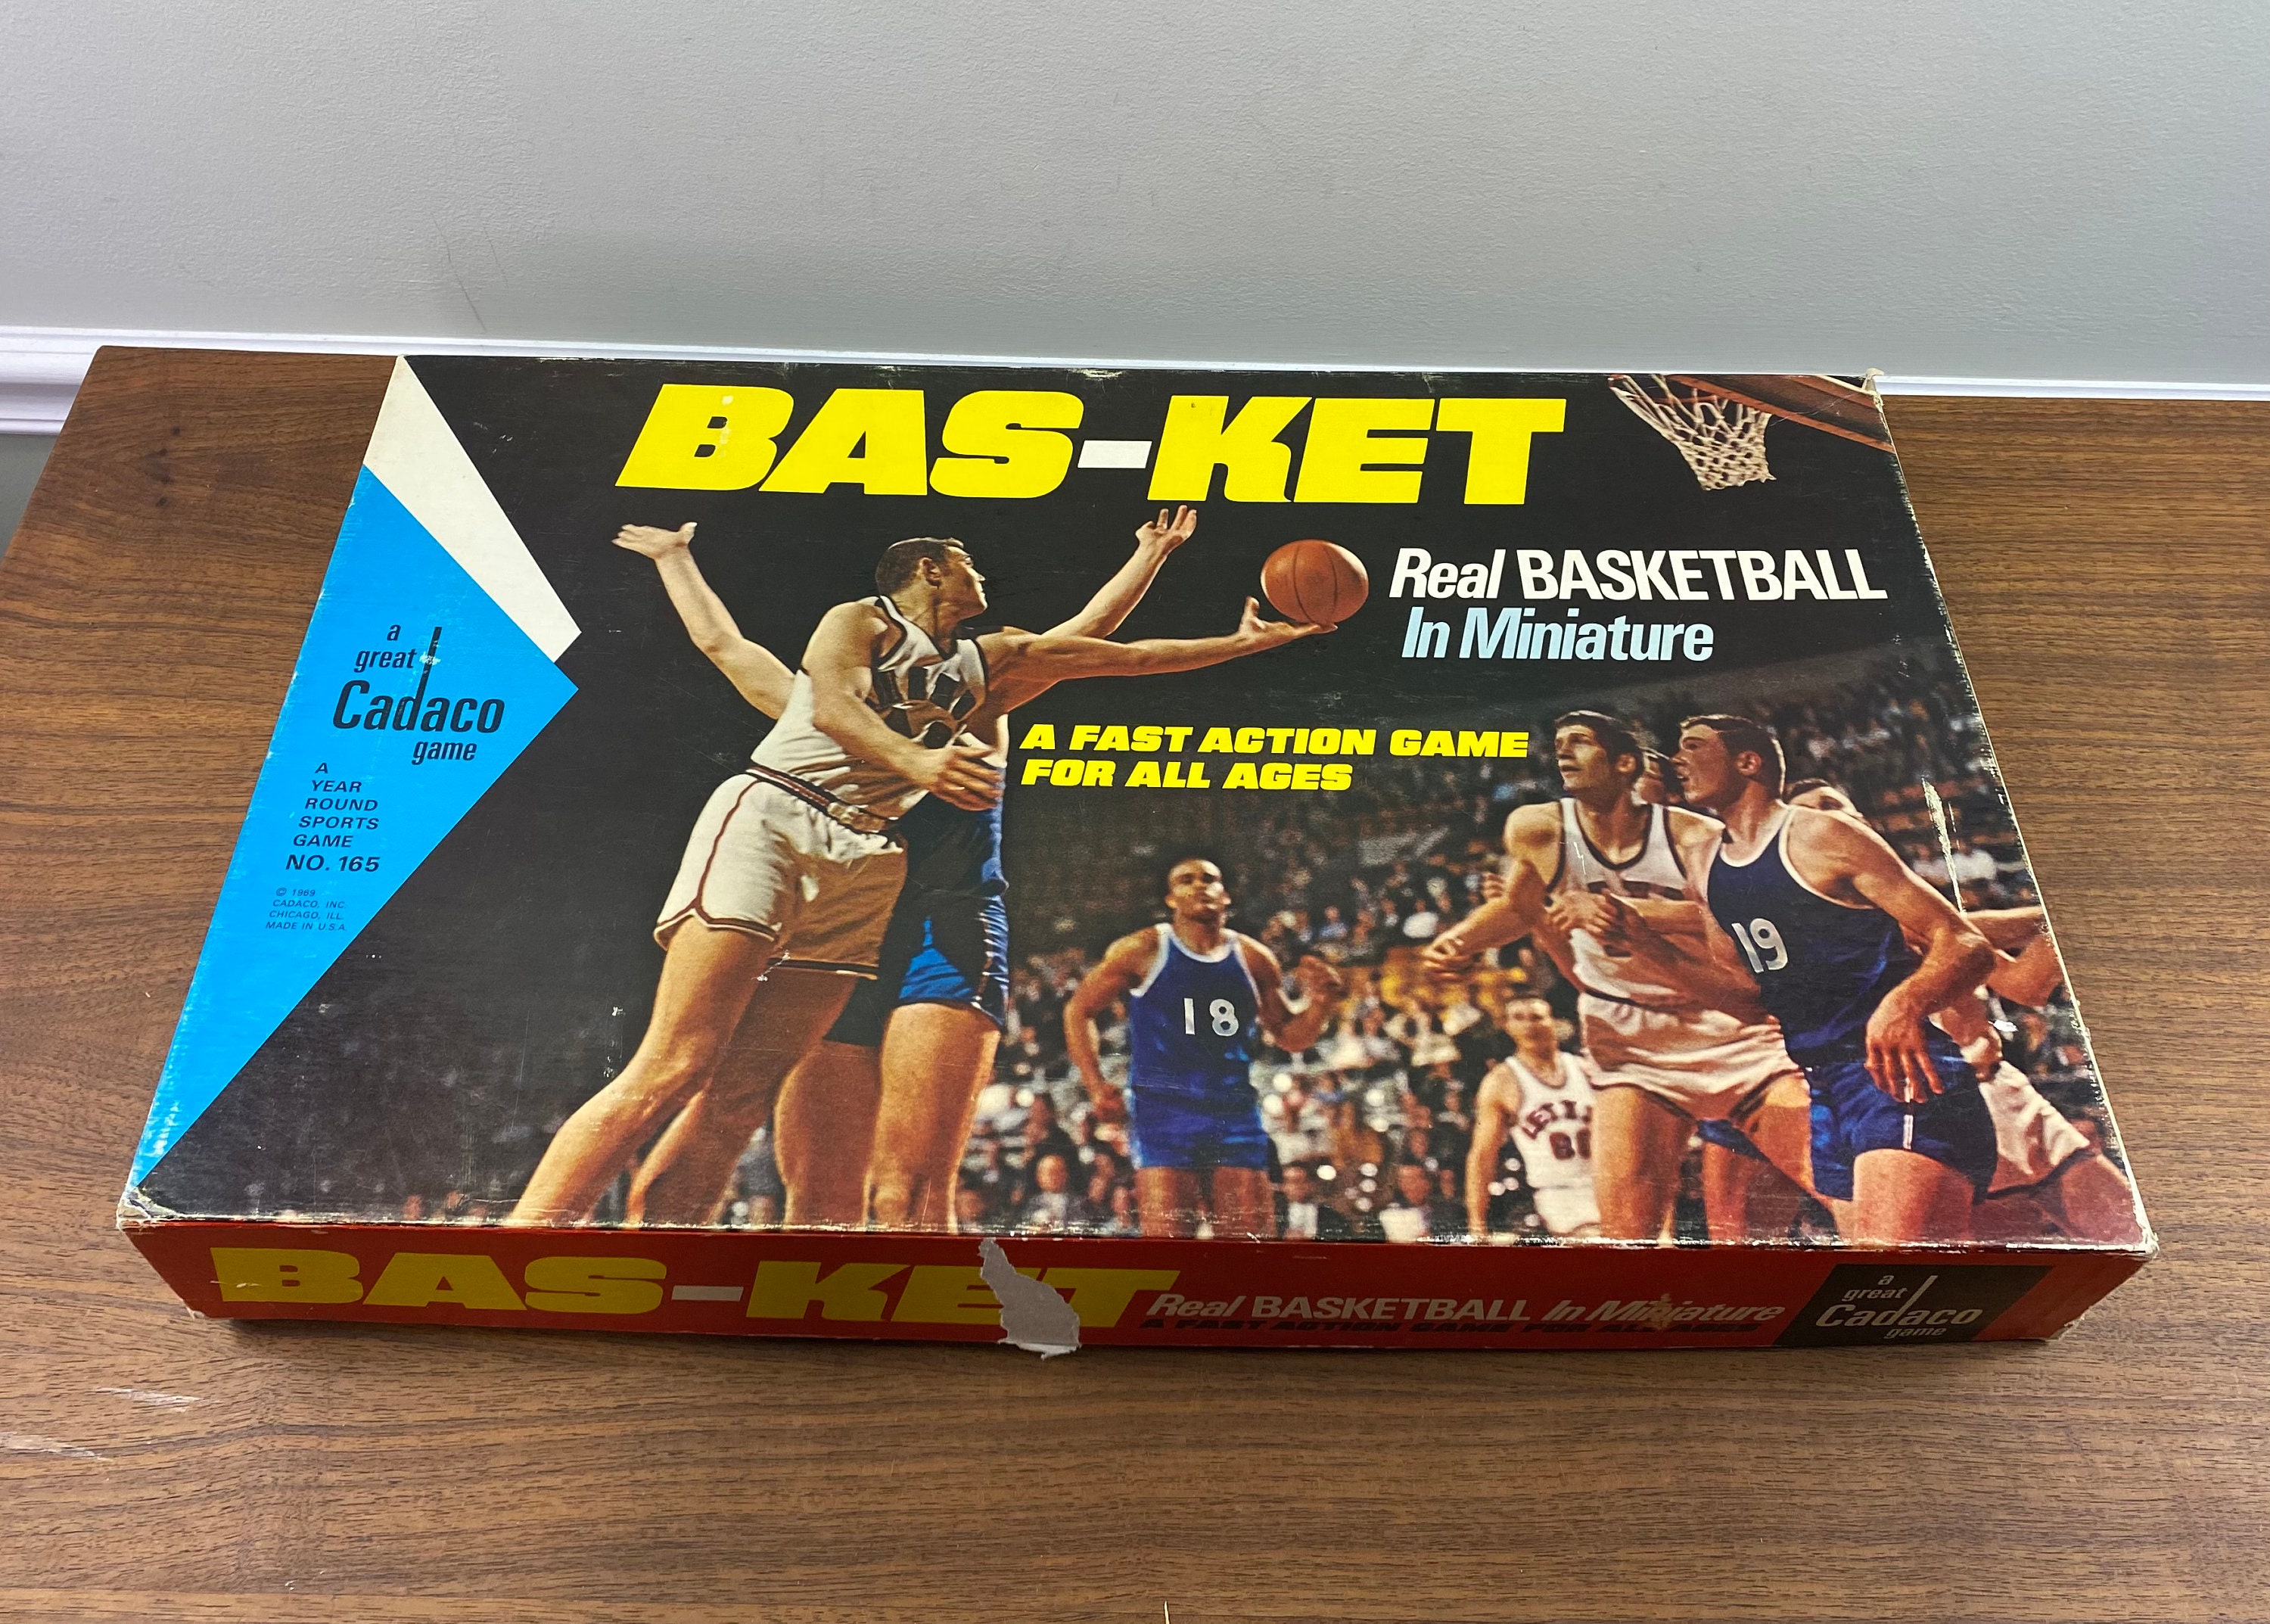 Vintage 1973 CADACO Bas-Ket Basketball Game Shows Wear and tear